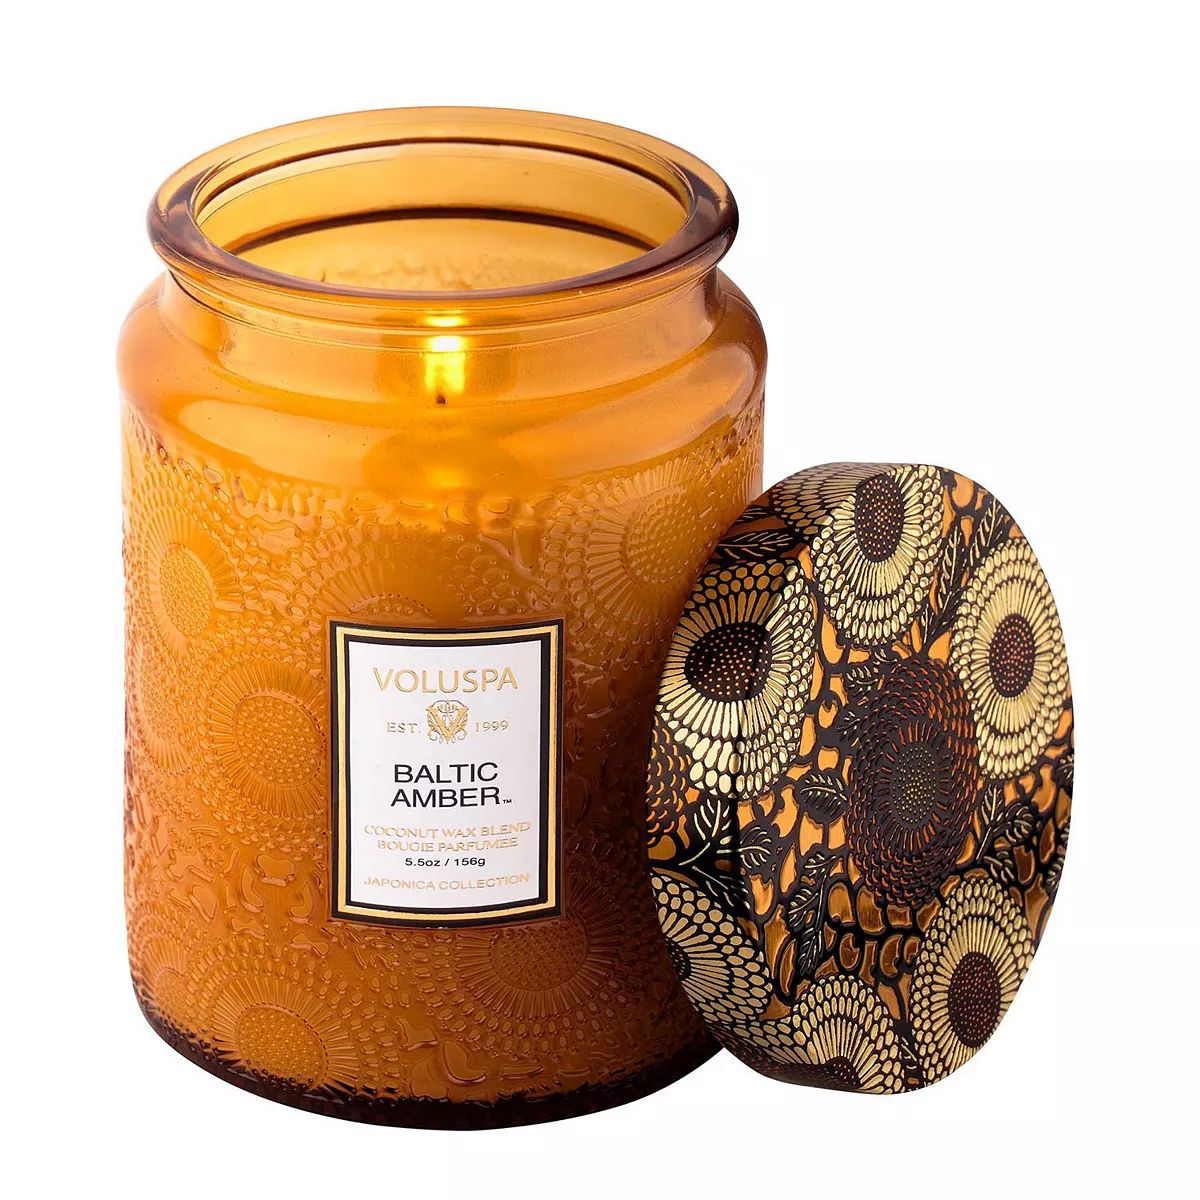 Voluspa Baltic Amber Glass Candle | Kohl's